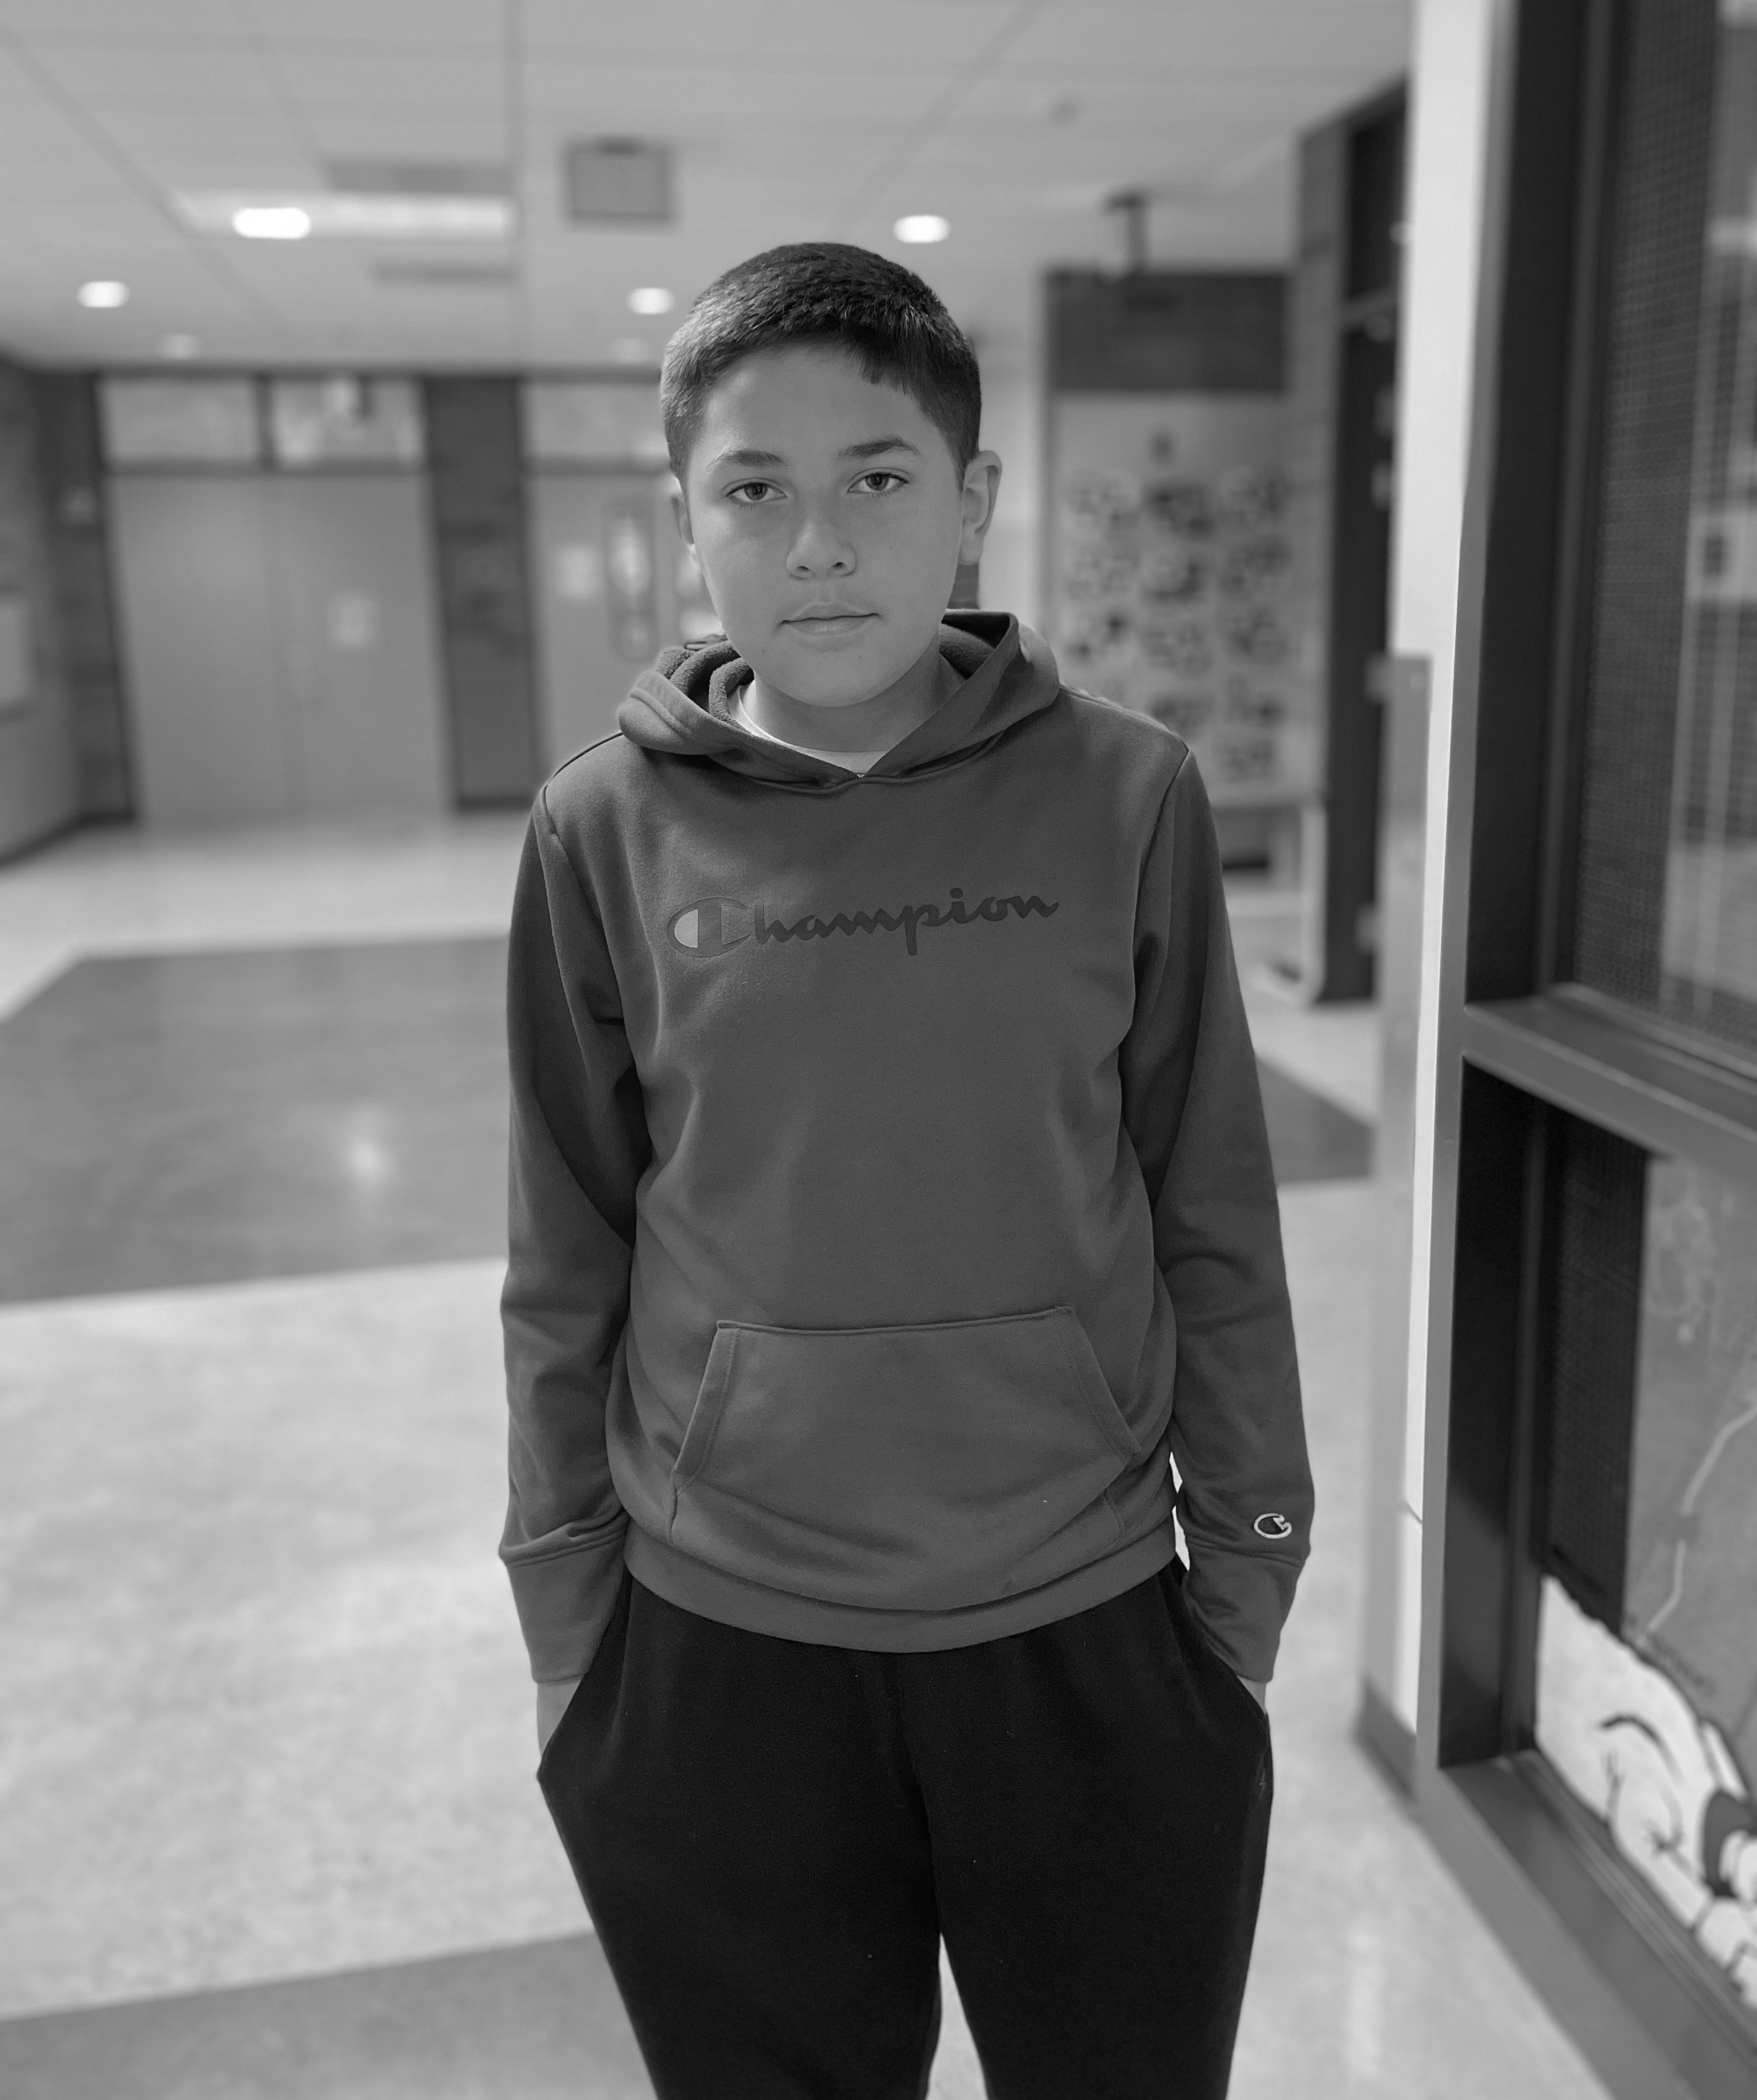 Manuel student at Washington Elementary School